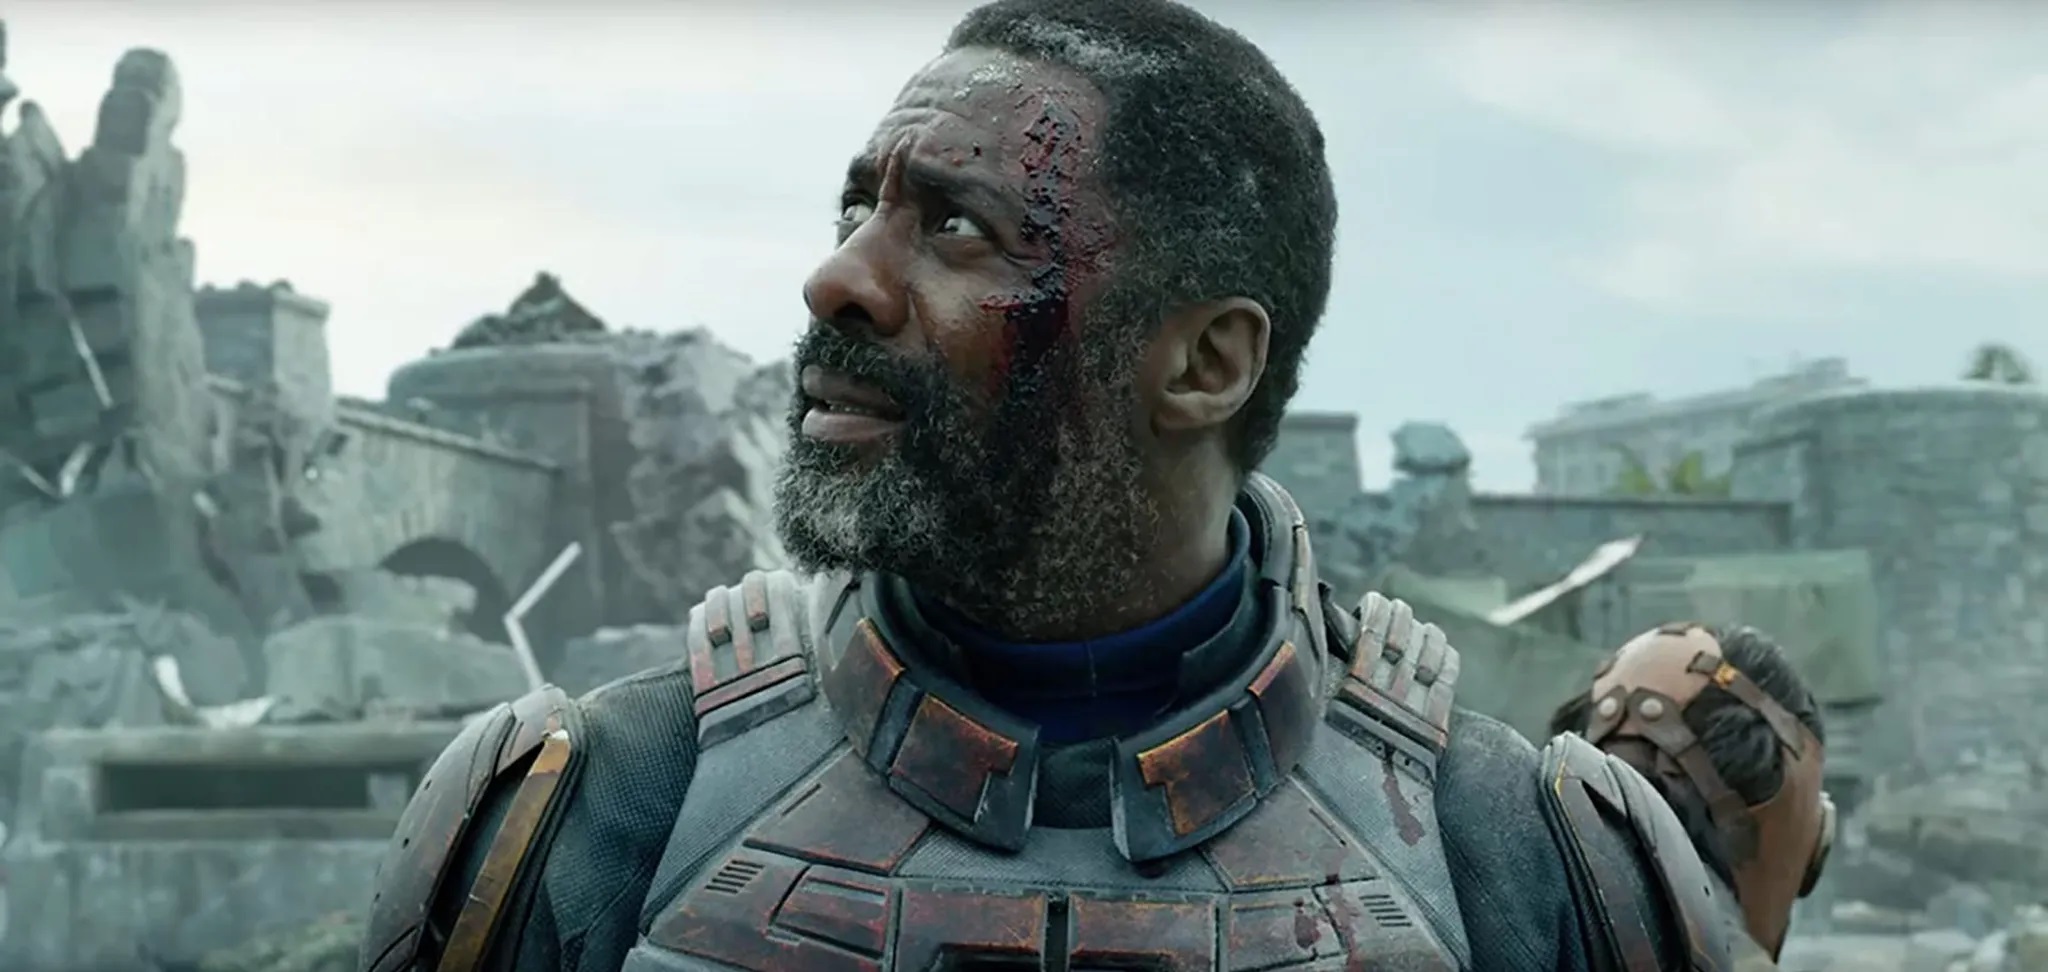 Idris Elba as bloodsport